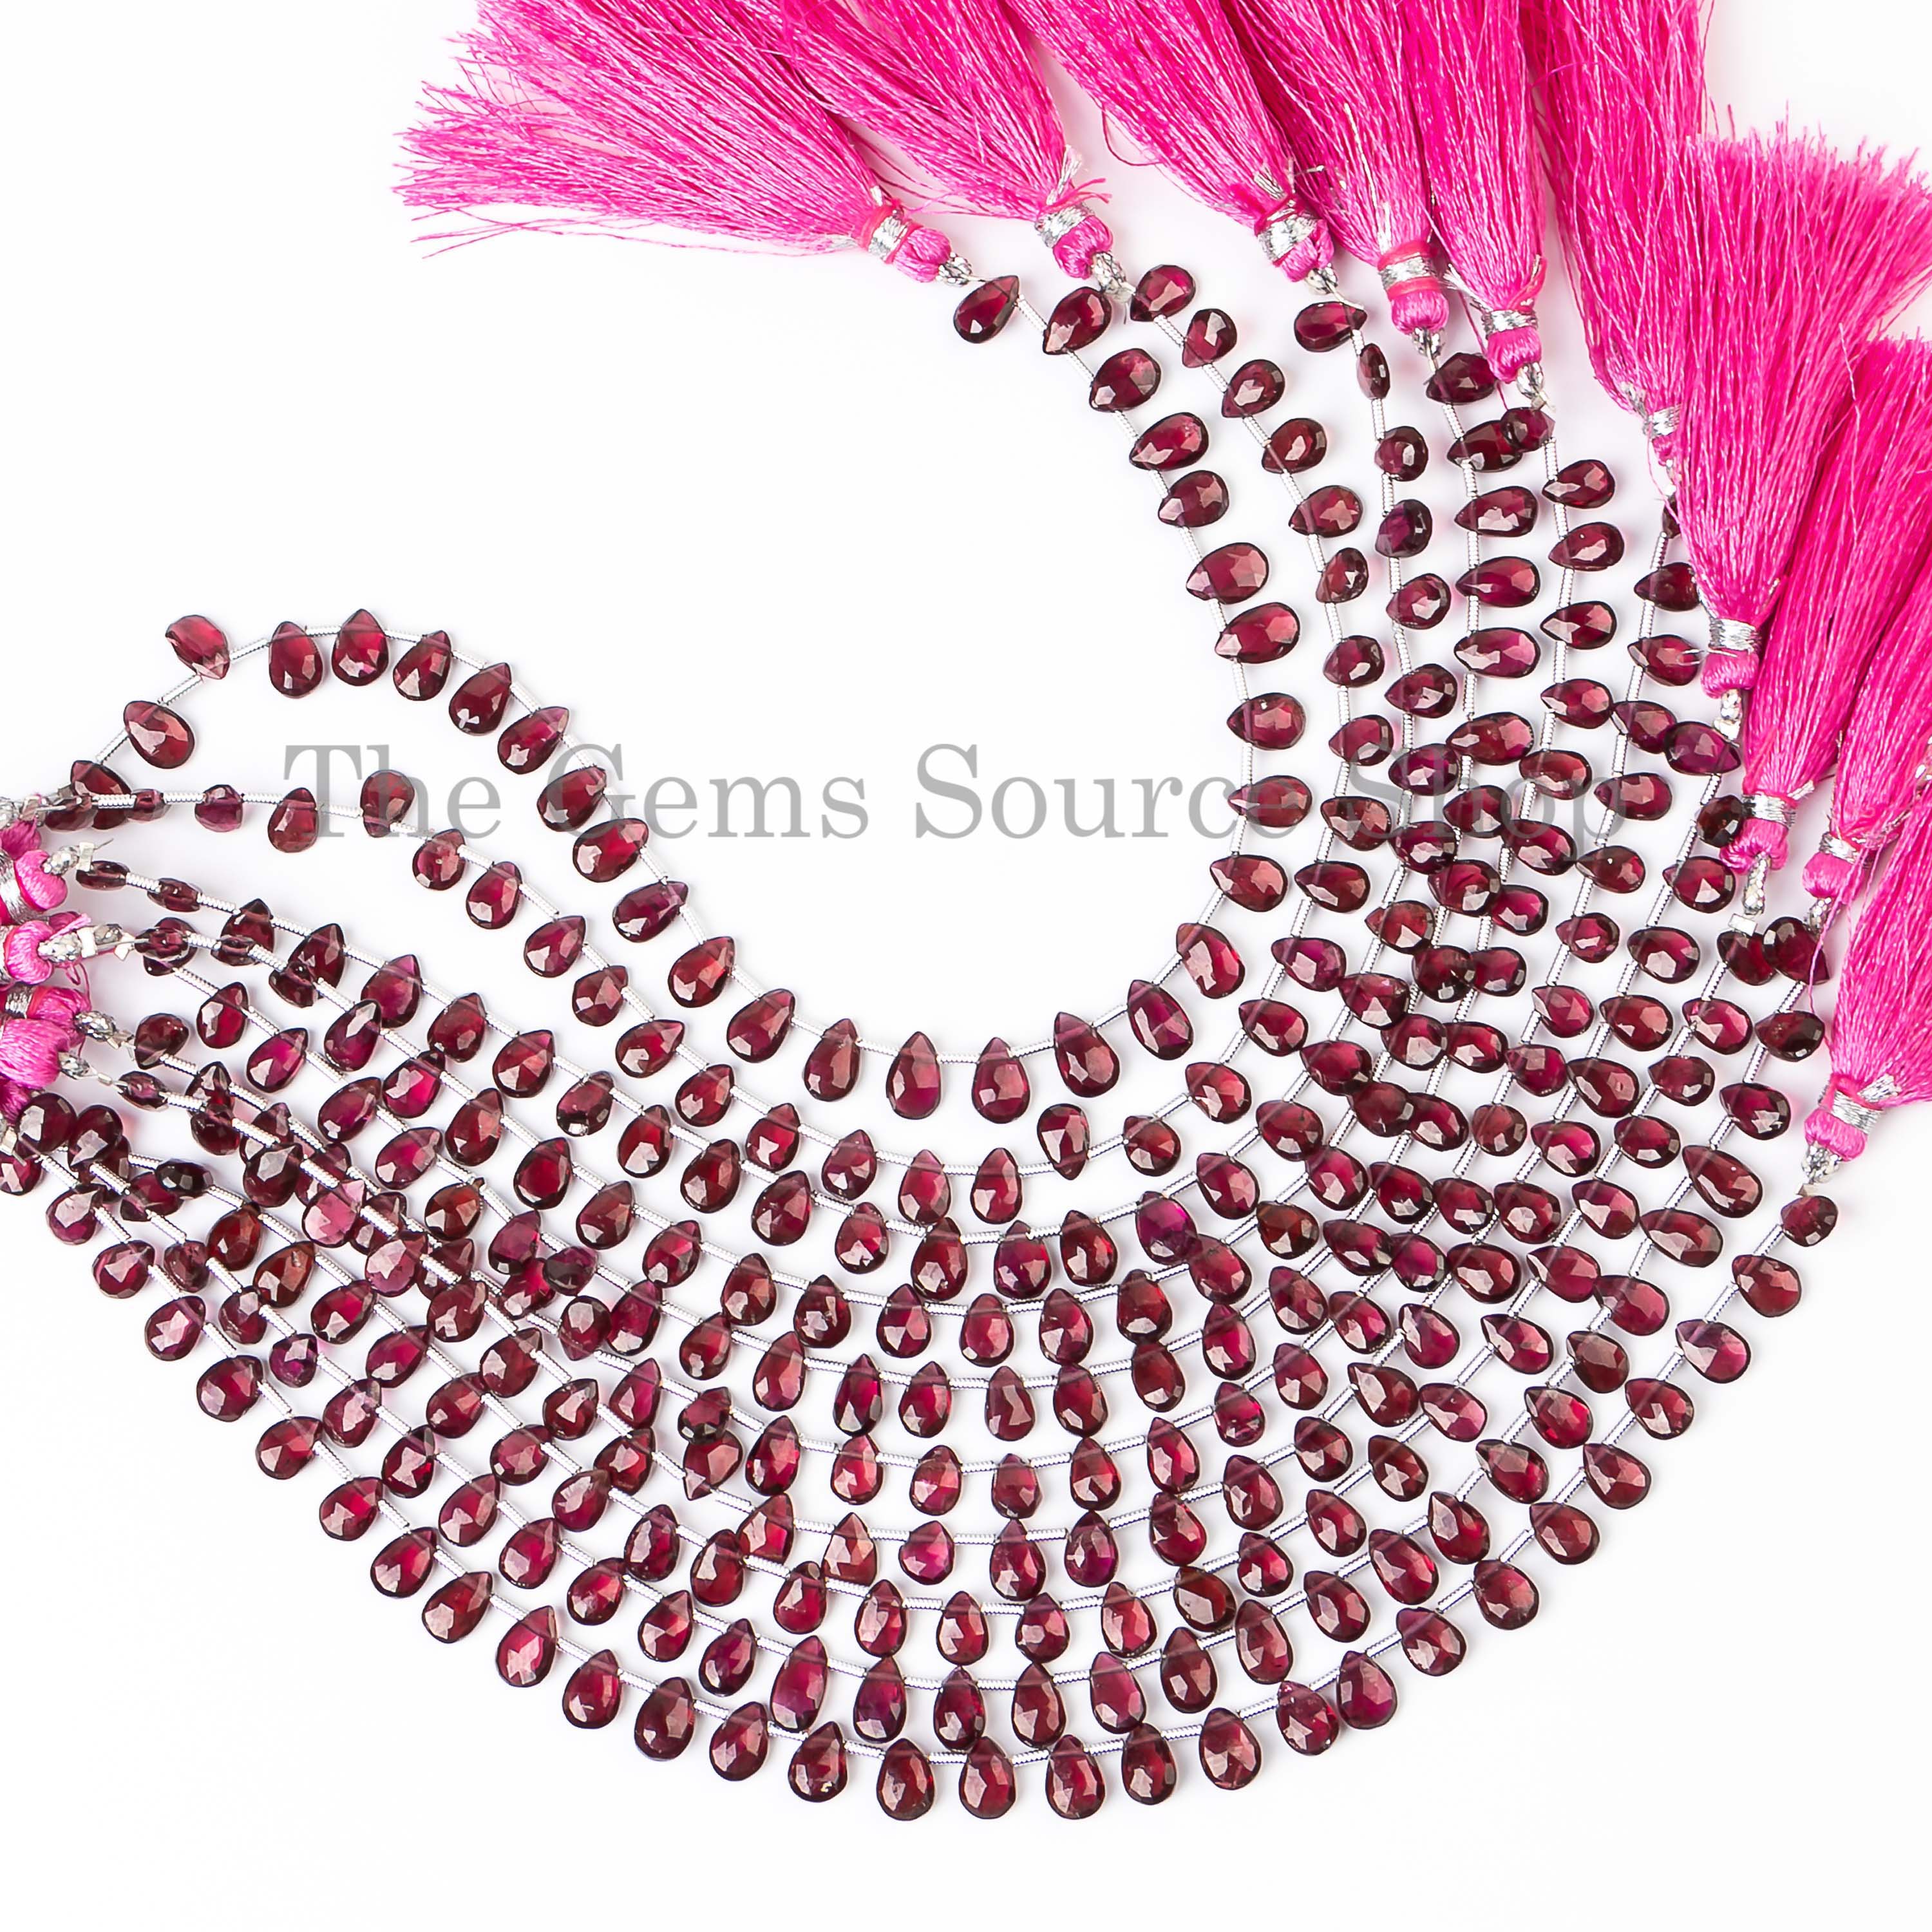 Rhodolite Garnet Faceted Pear Shape Beads, Side Drill Pear Beads, Garnet Briolette Beads